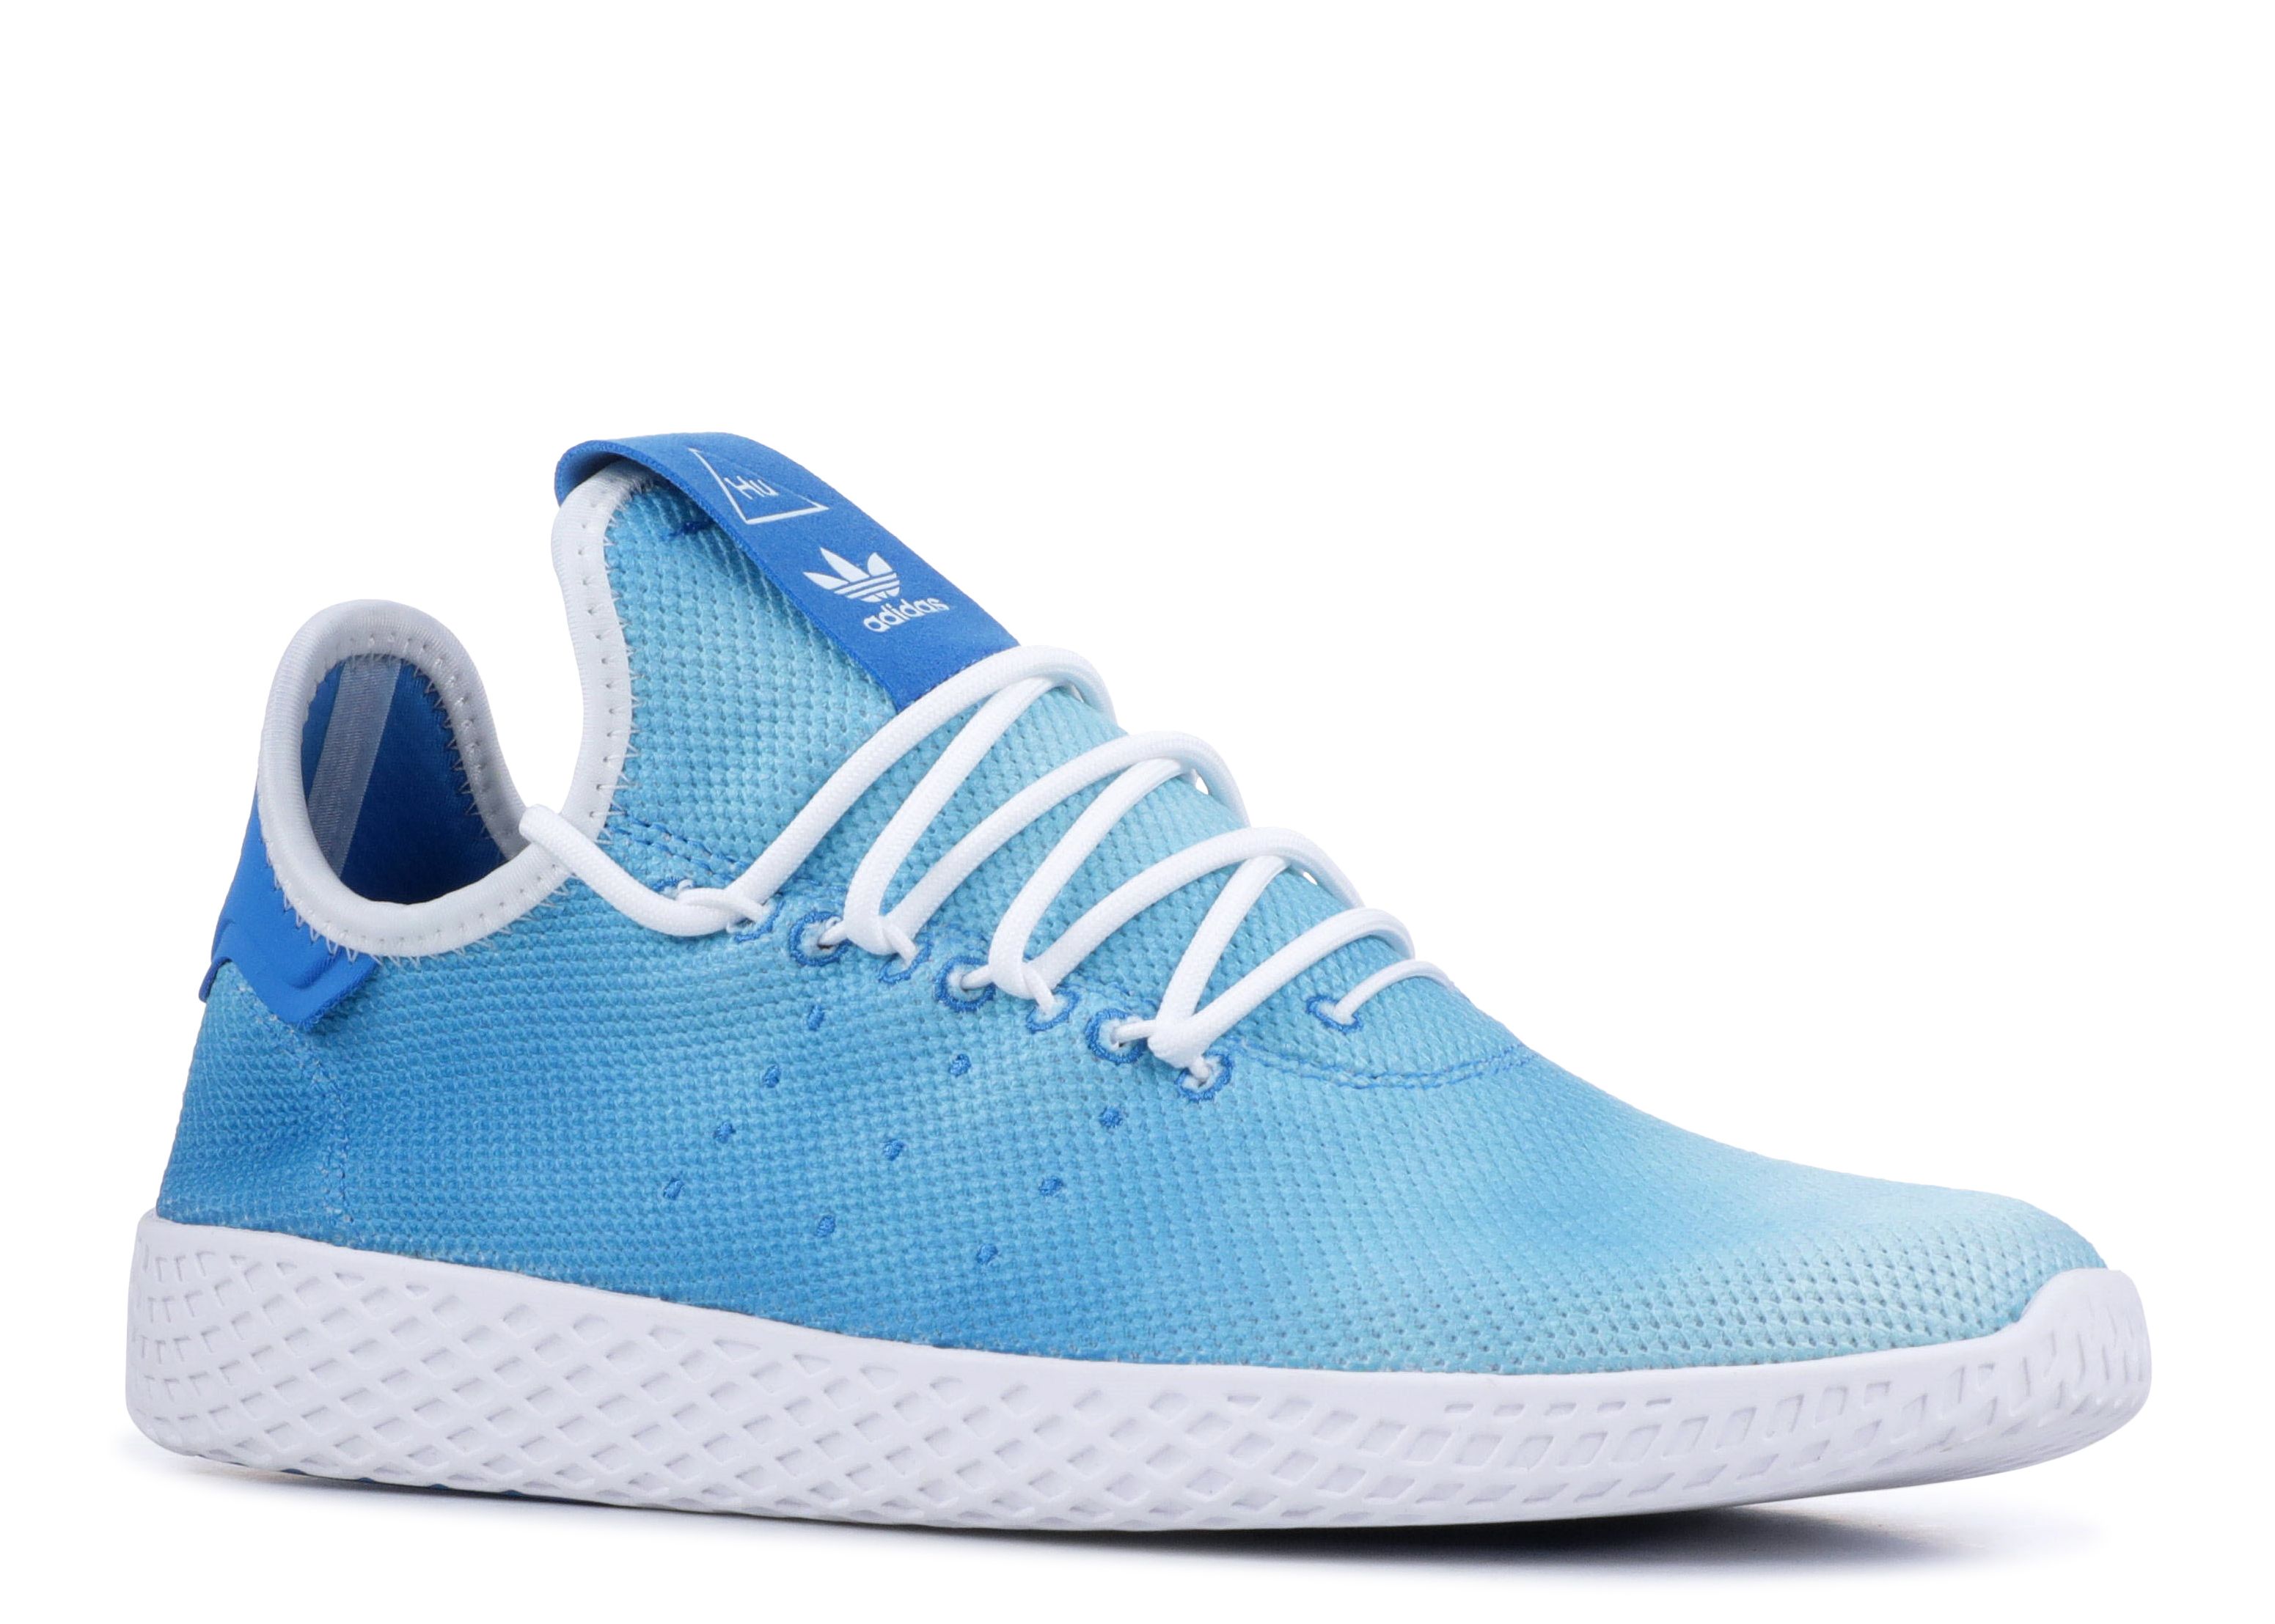 blue pharrell adidas shoes